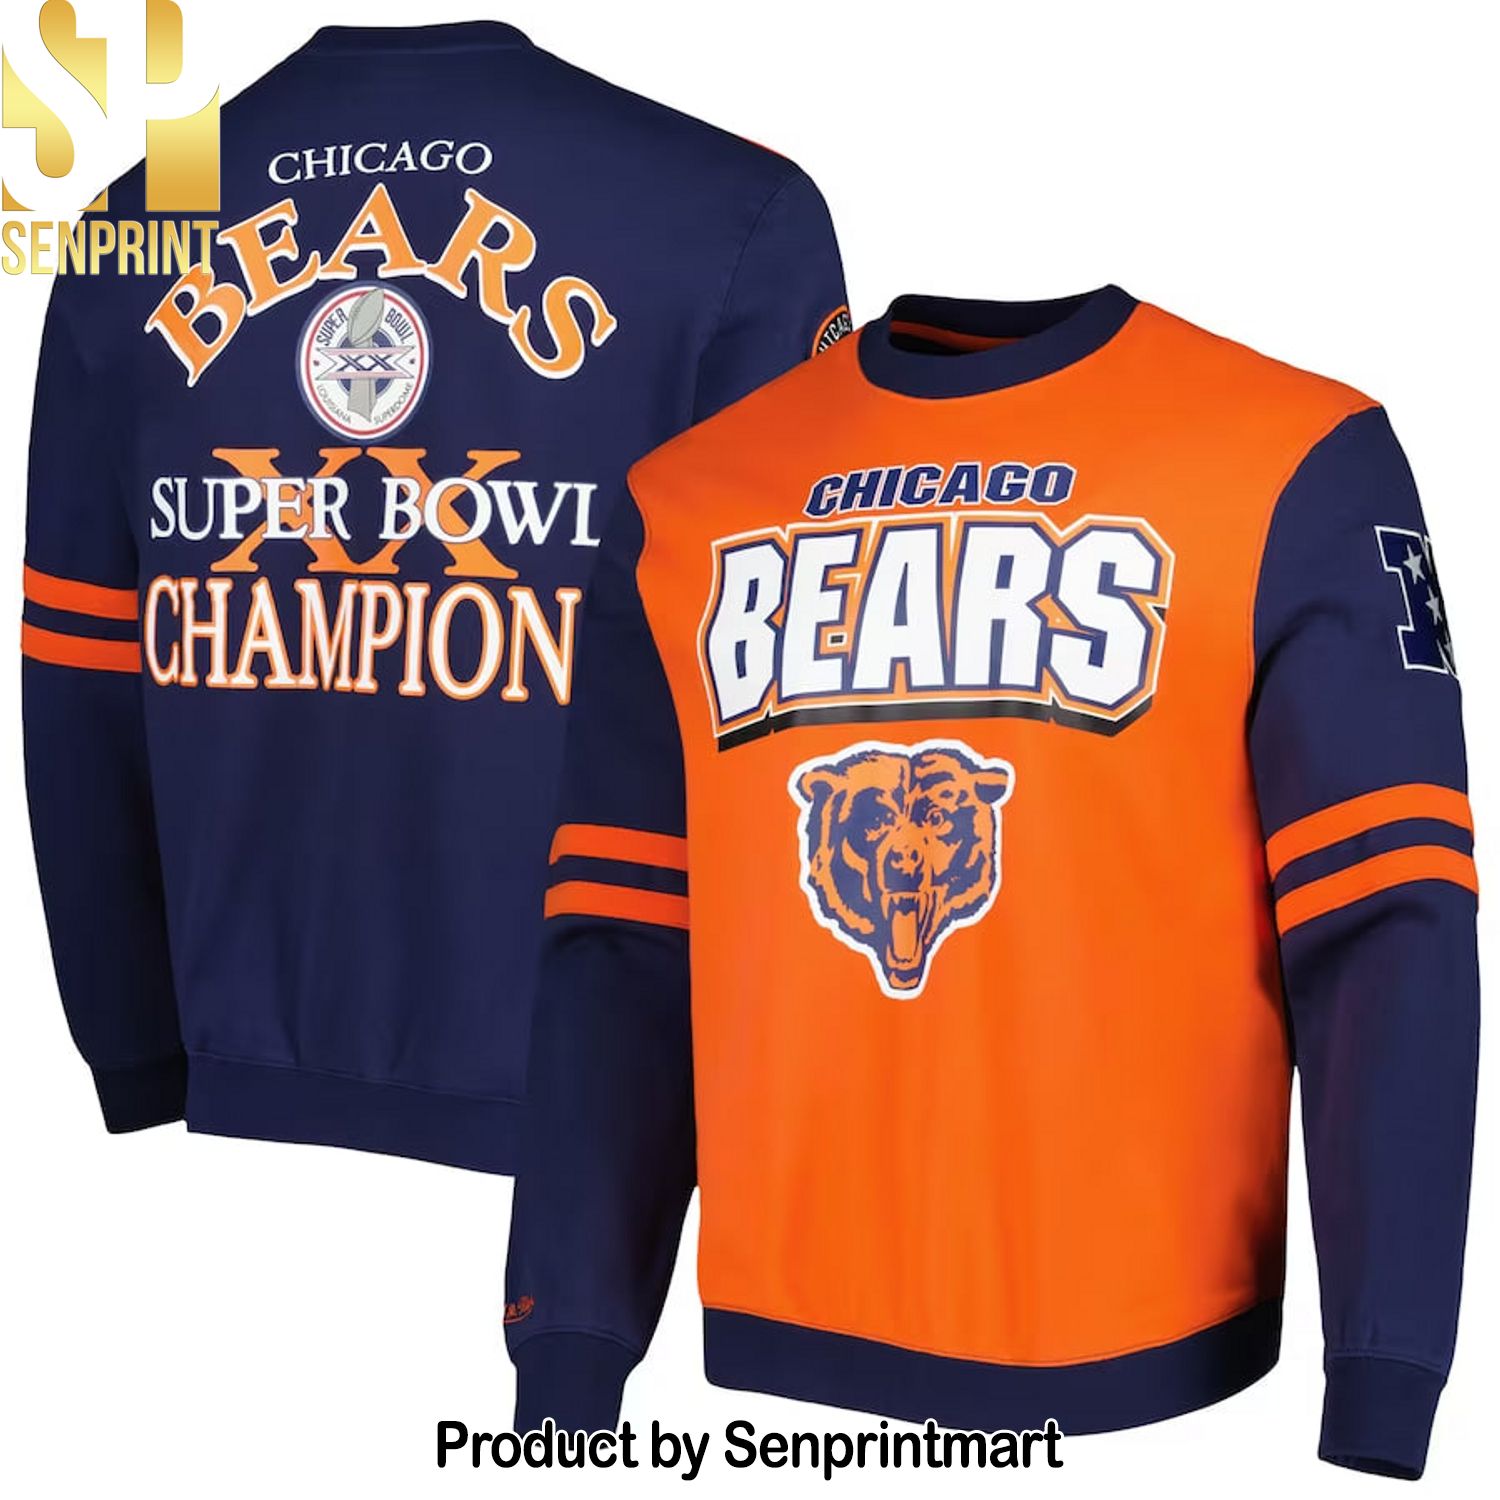 Chicago Bears Super bowl Champions Sweatshirt